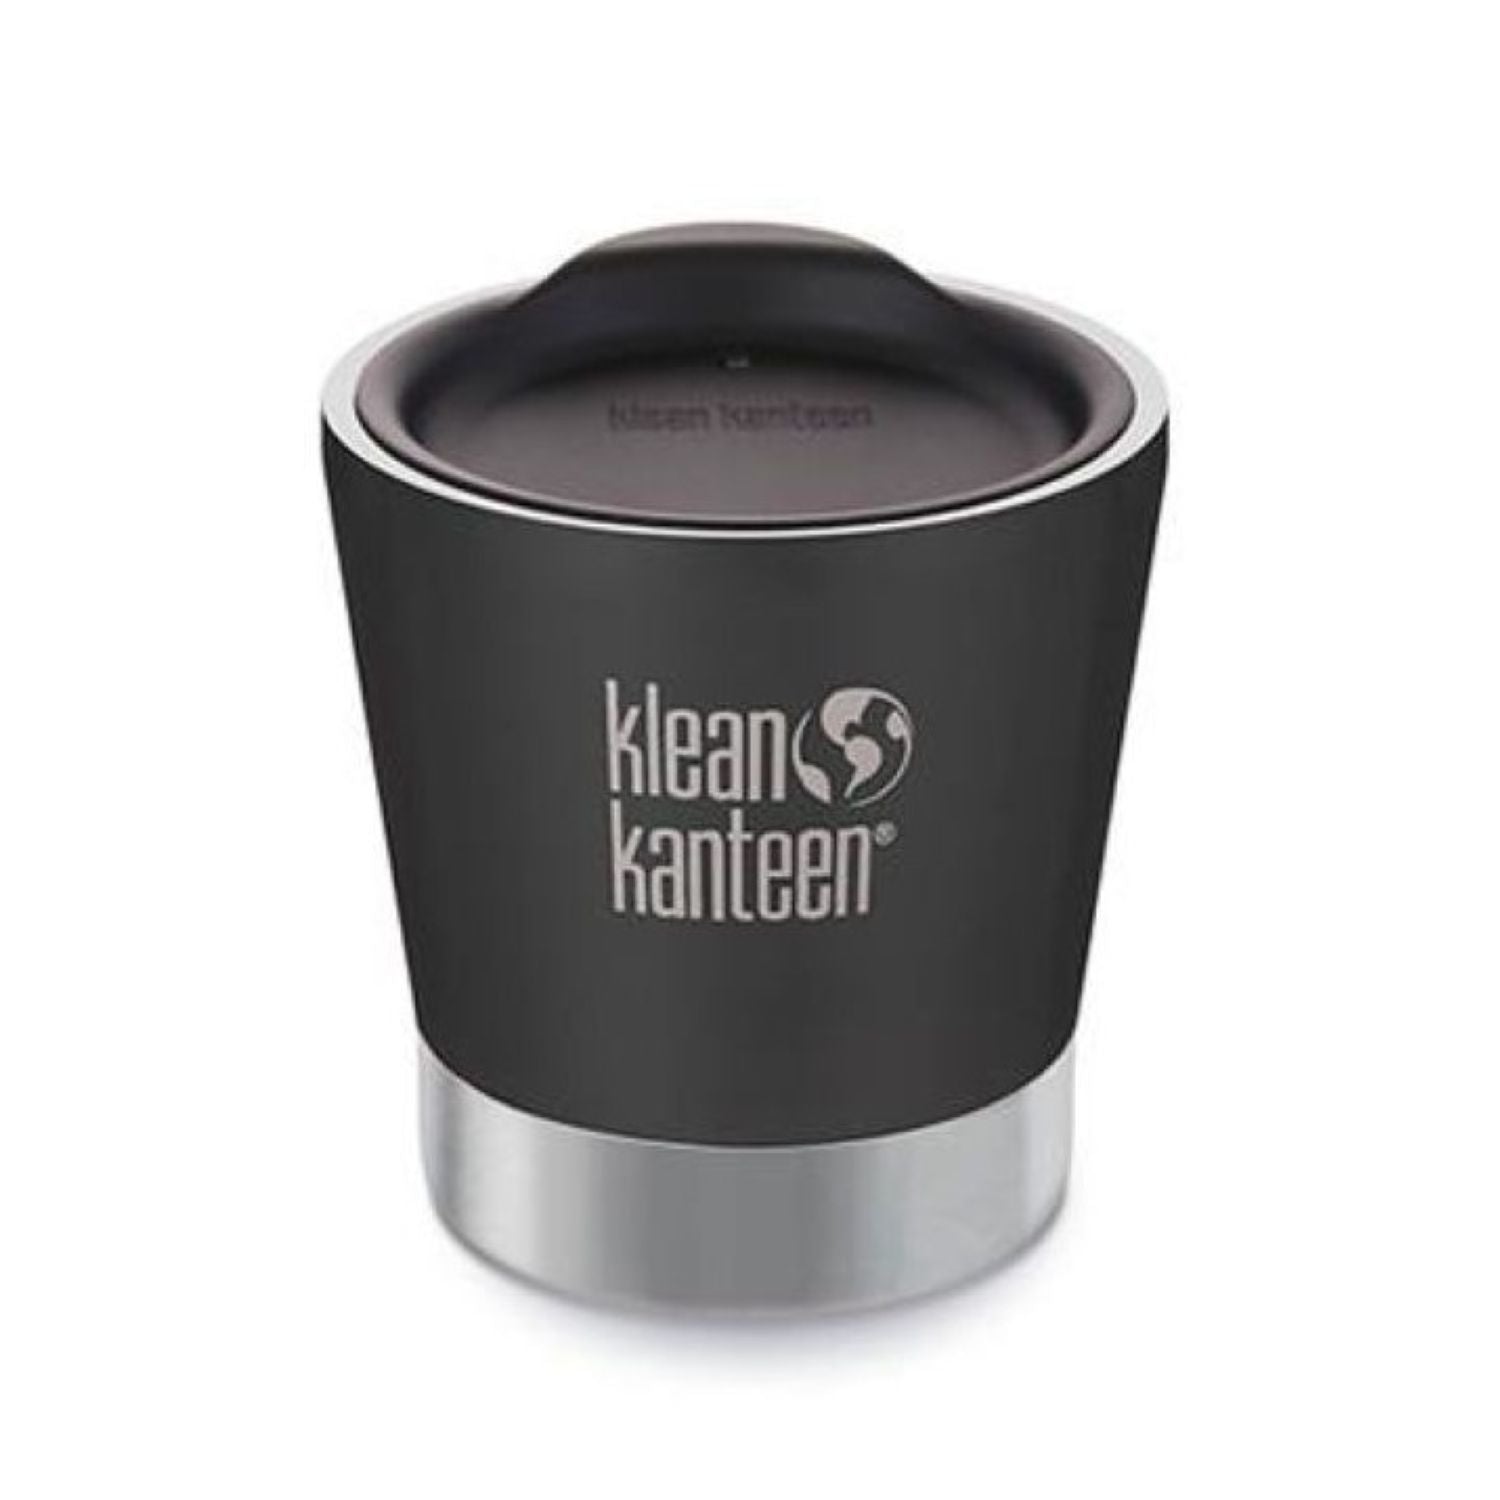 Klean Kanteen Insulated Tumbler / Cup